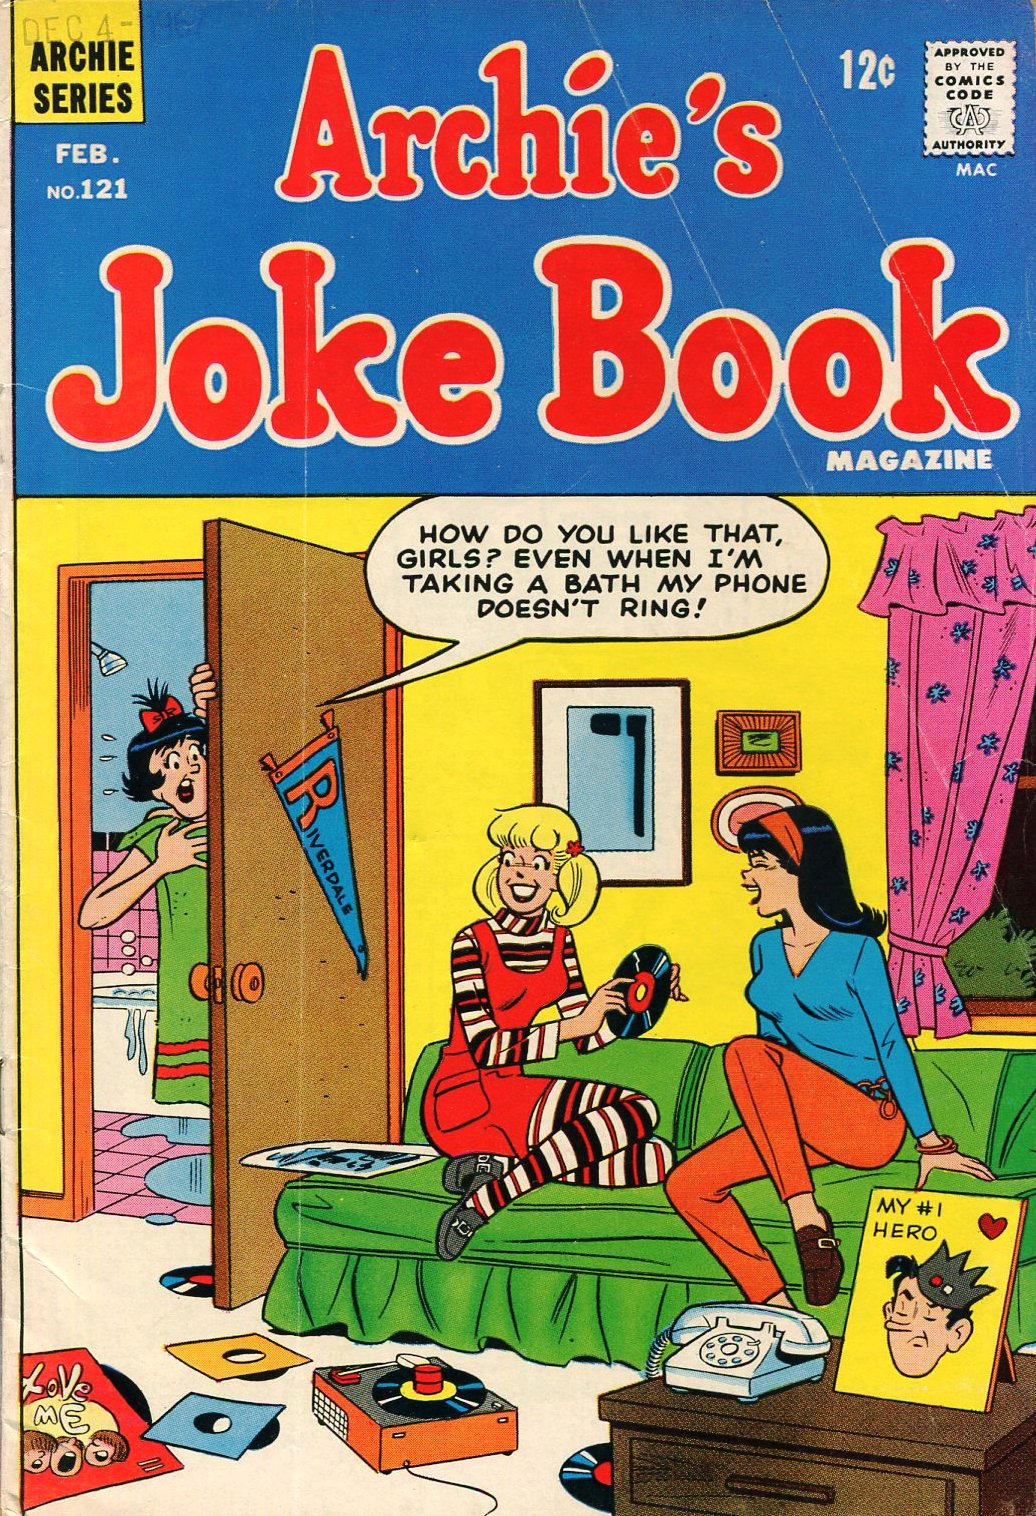 Archie's Joke Book Magazine issue 121 - Page 1